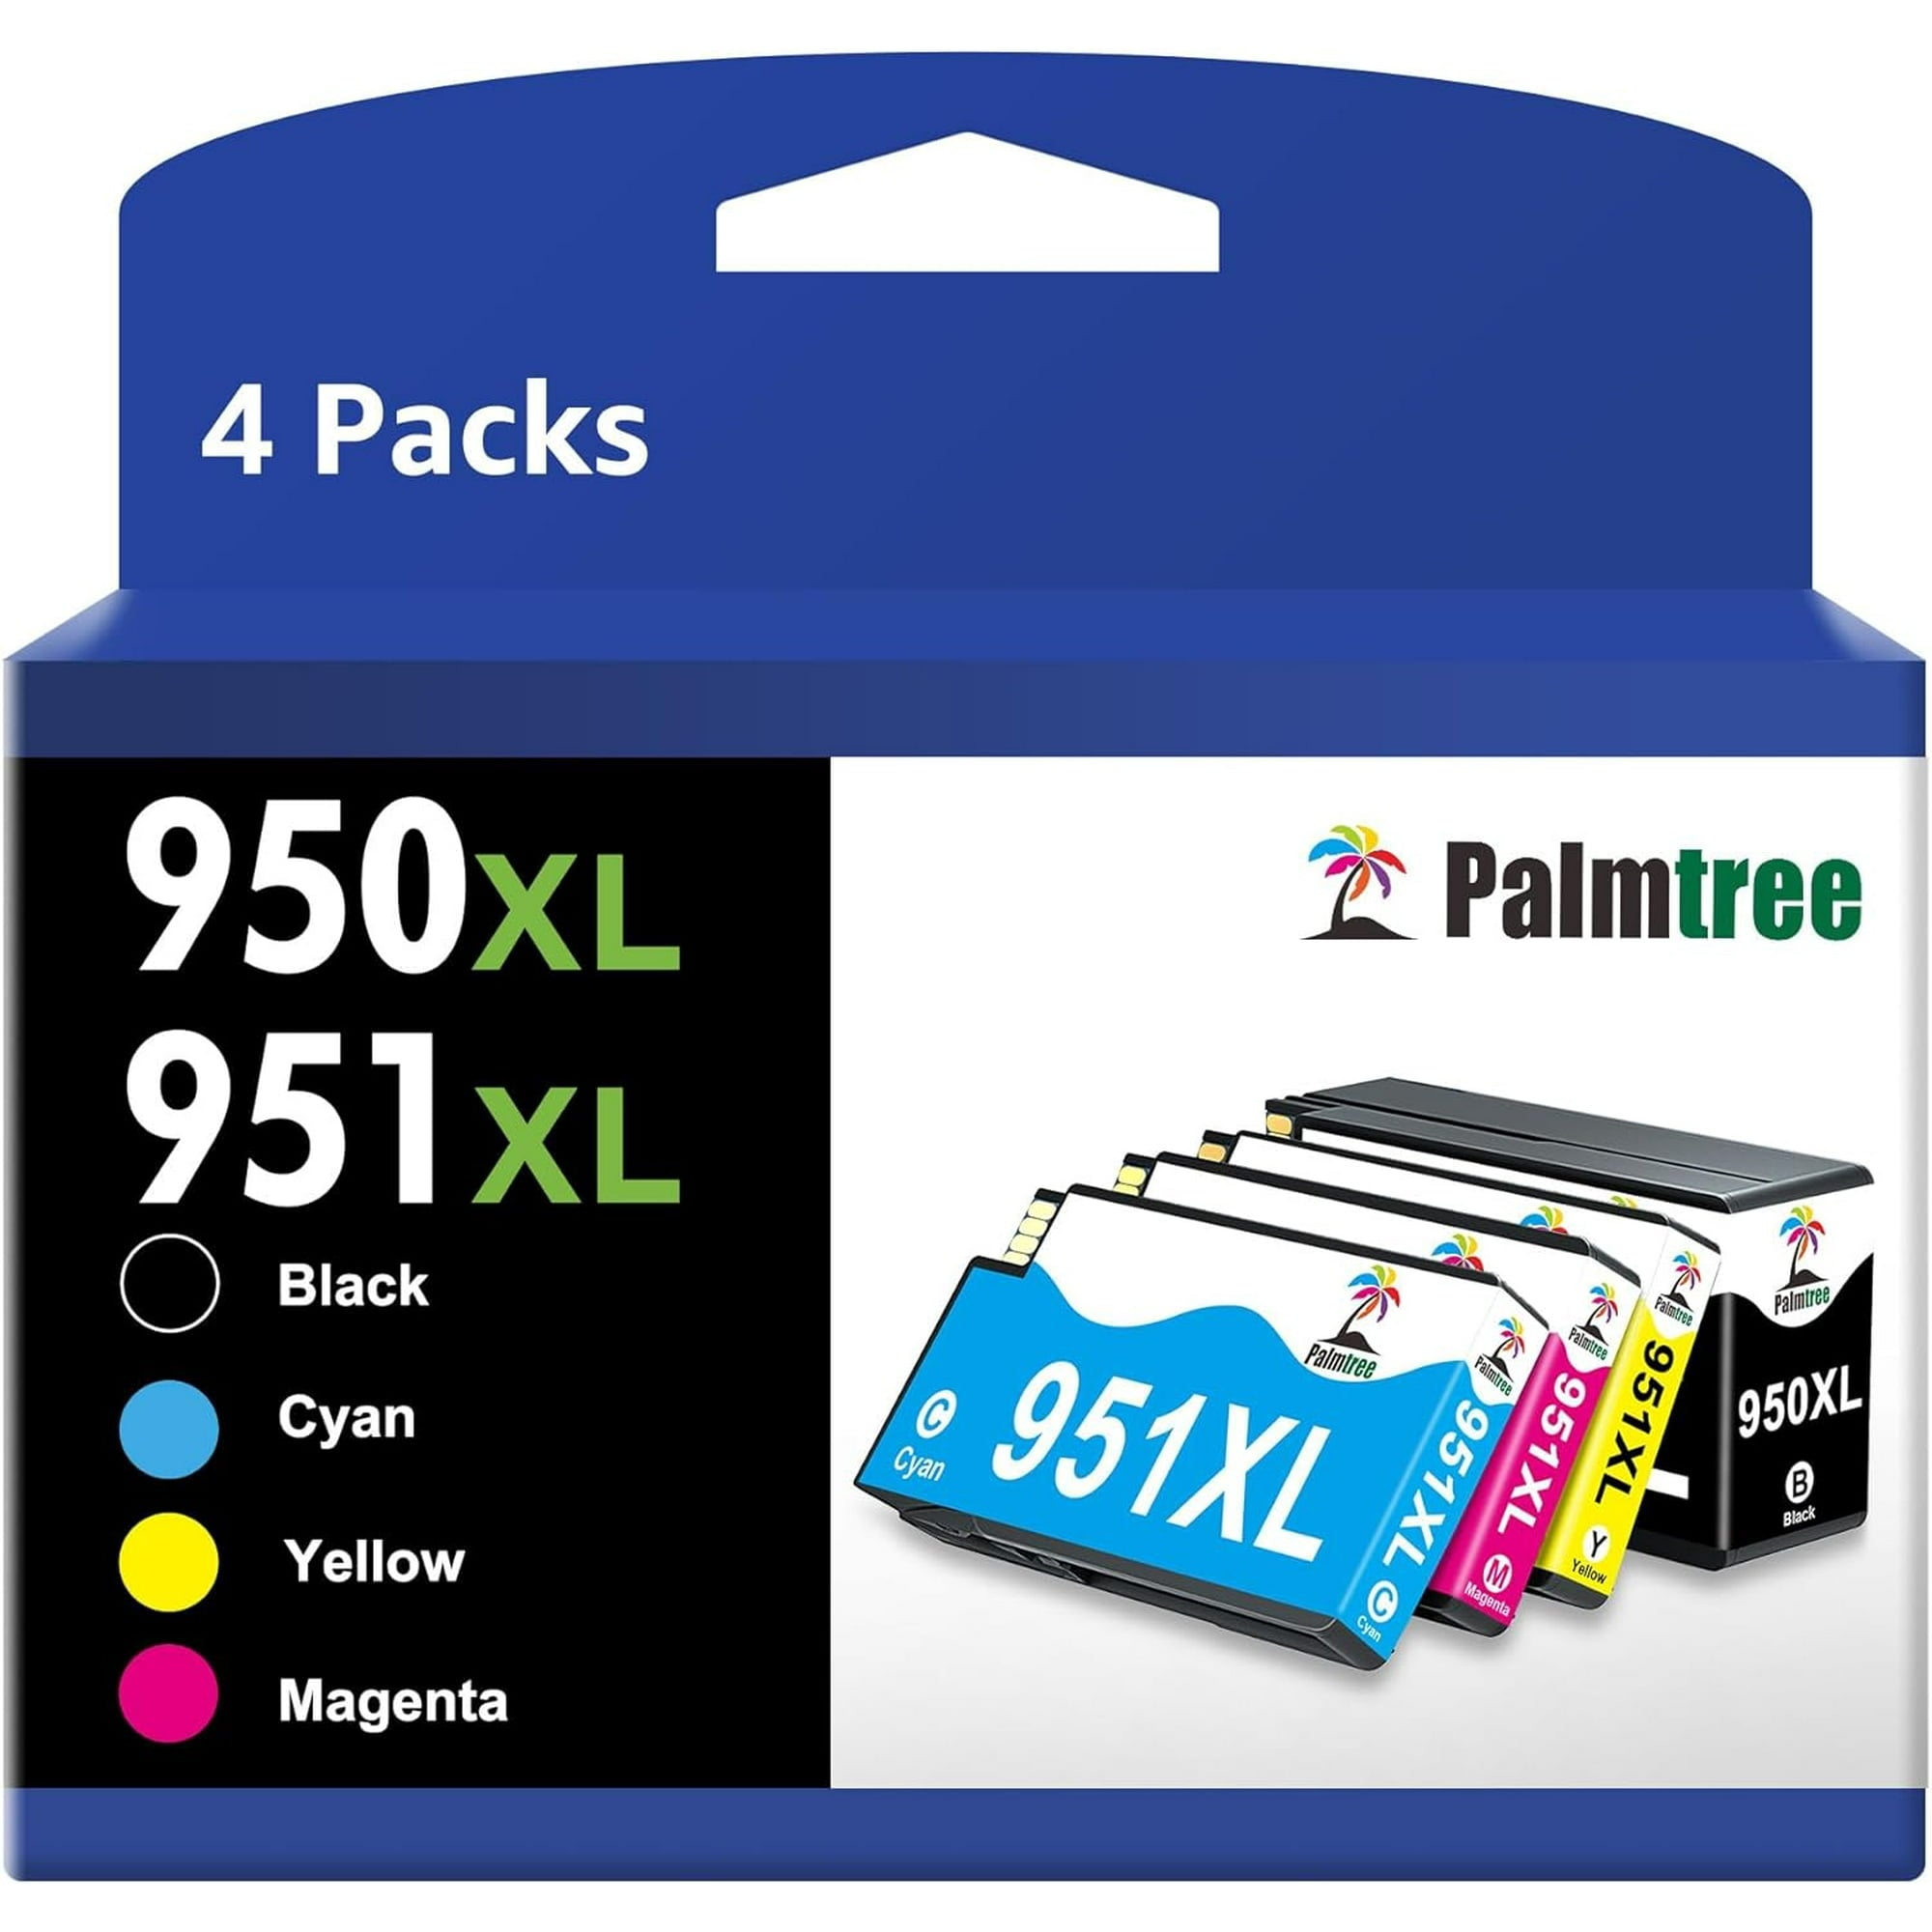 Palmtree 950 951 Ink Cartridge Replacement for HP Printer Ink Cartridge (4 Combo Pack)